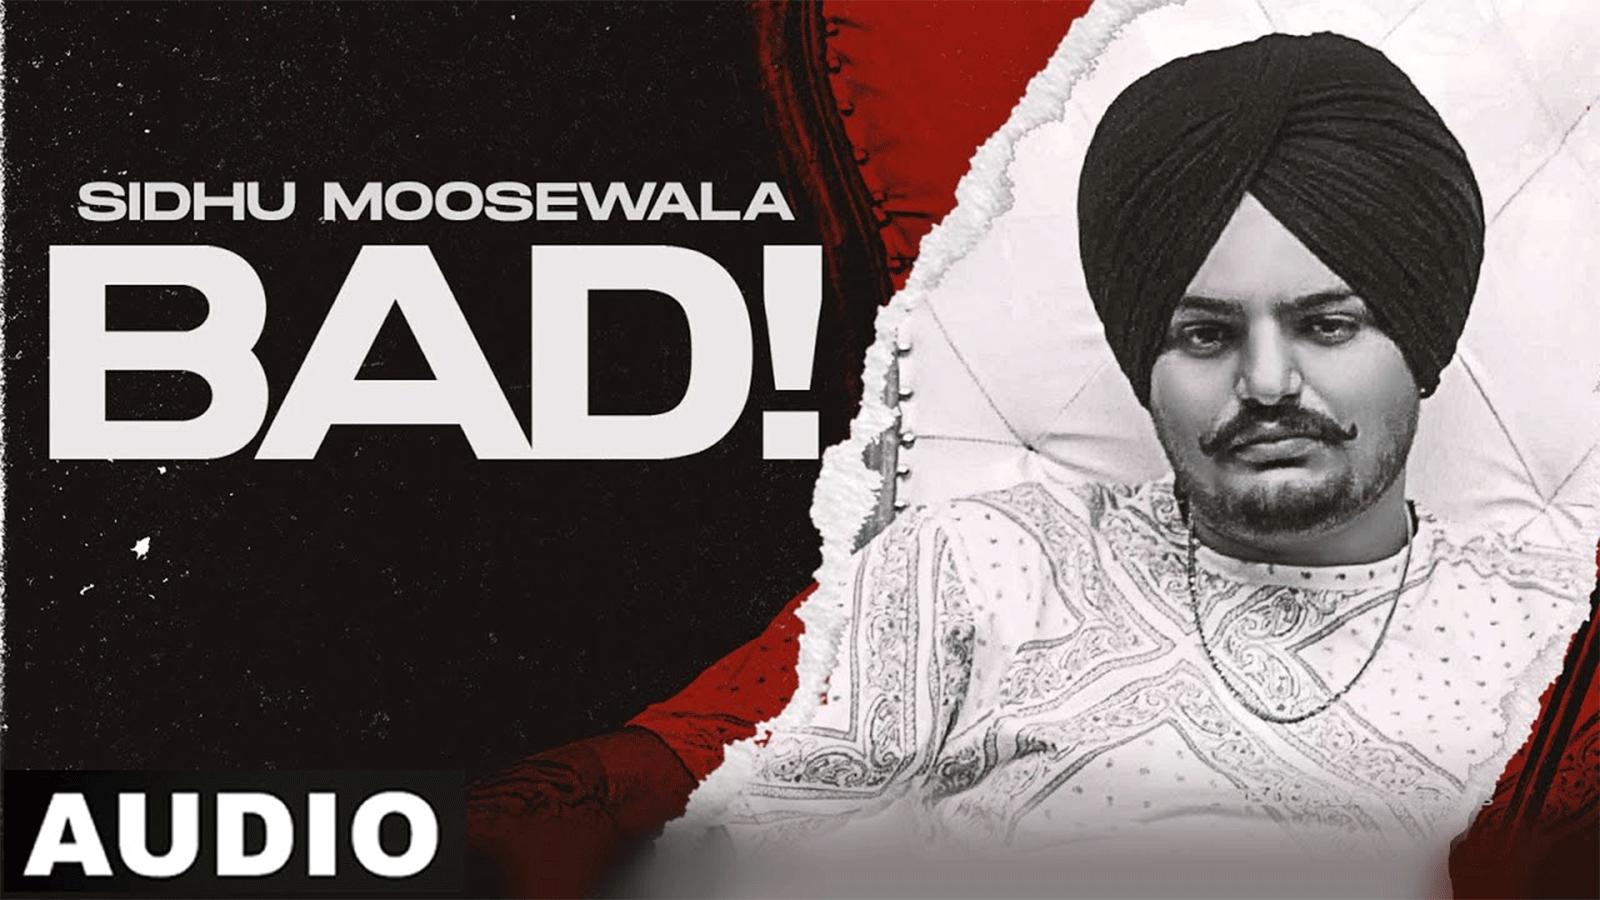 Watch New 2020 Punjabi Audio Song 'Bad' Sung By Sidhu Moosewala ...